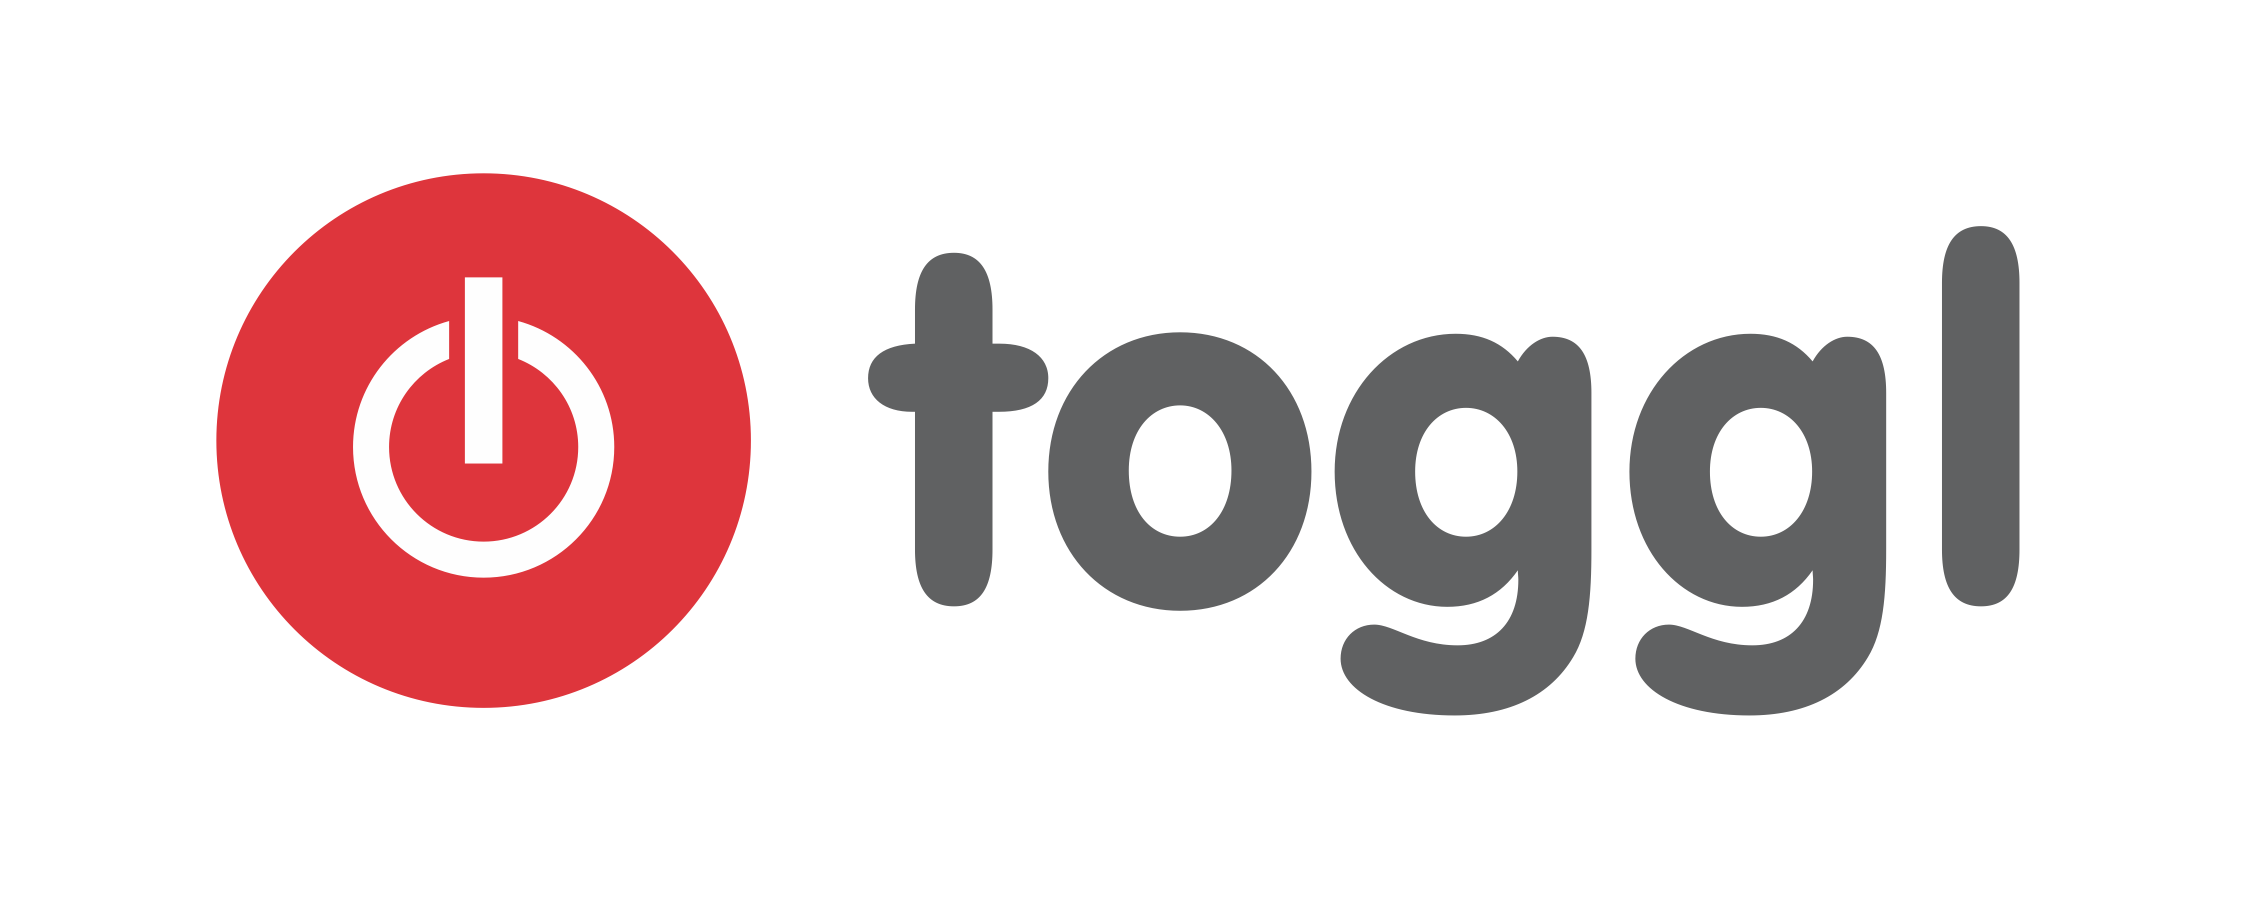 Toggl OÜ logo